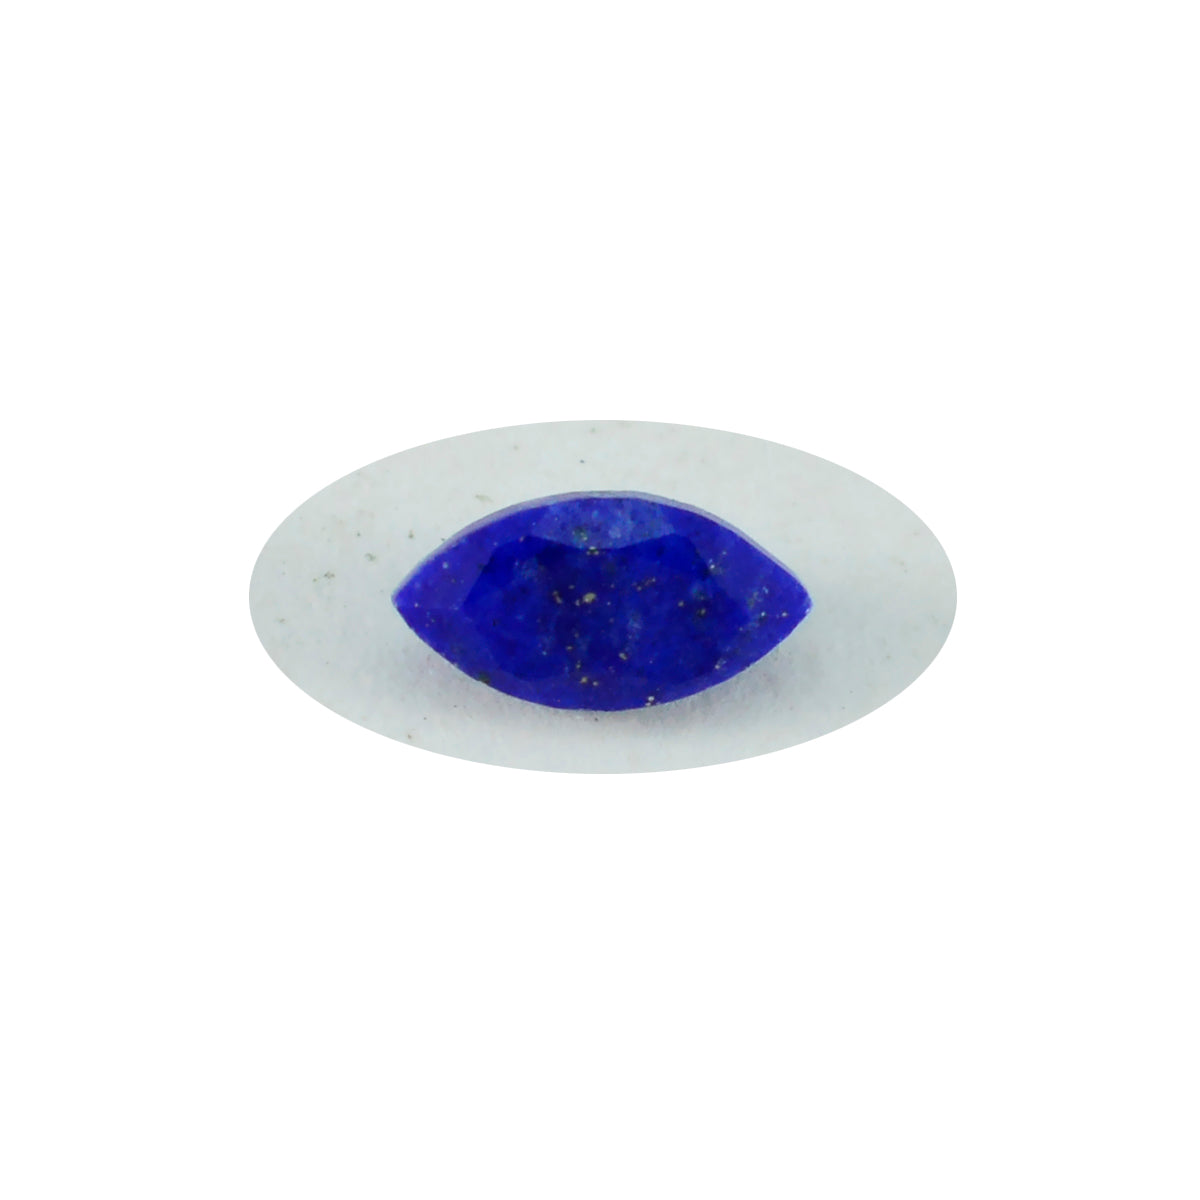 riyogems 1 pz genuino lapislazzuli blu sfaccettato 10x20 mm forma marquise gemme sfuse di buona qualità